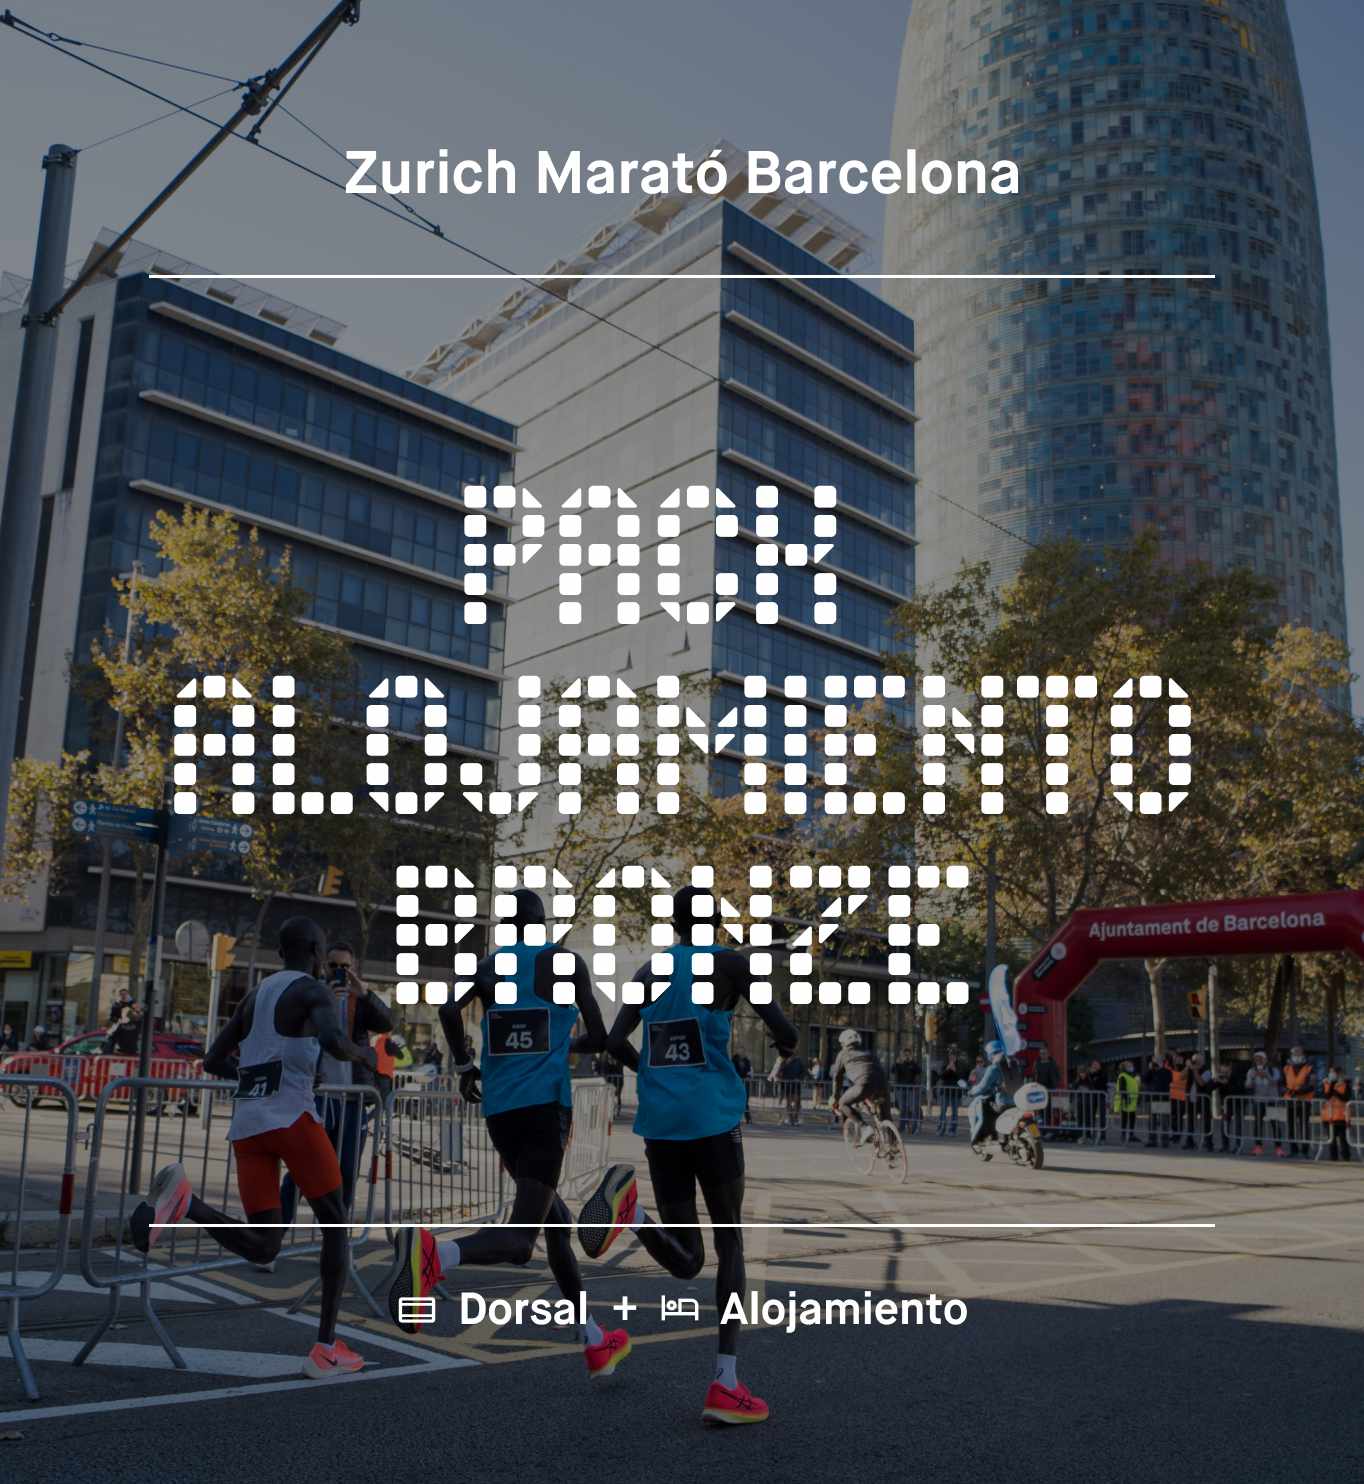 Zurich Marato Barcelona hotel pack dorsal